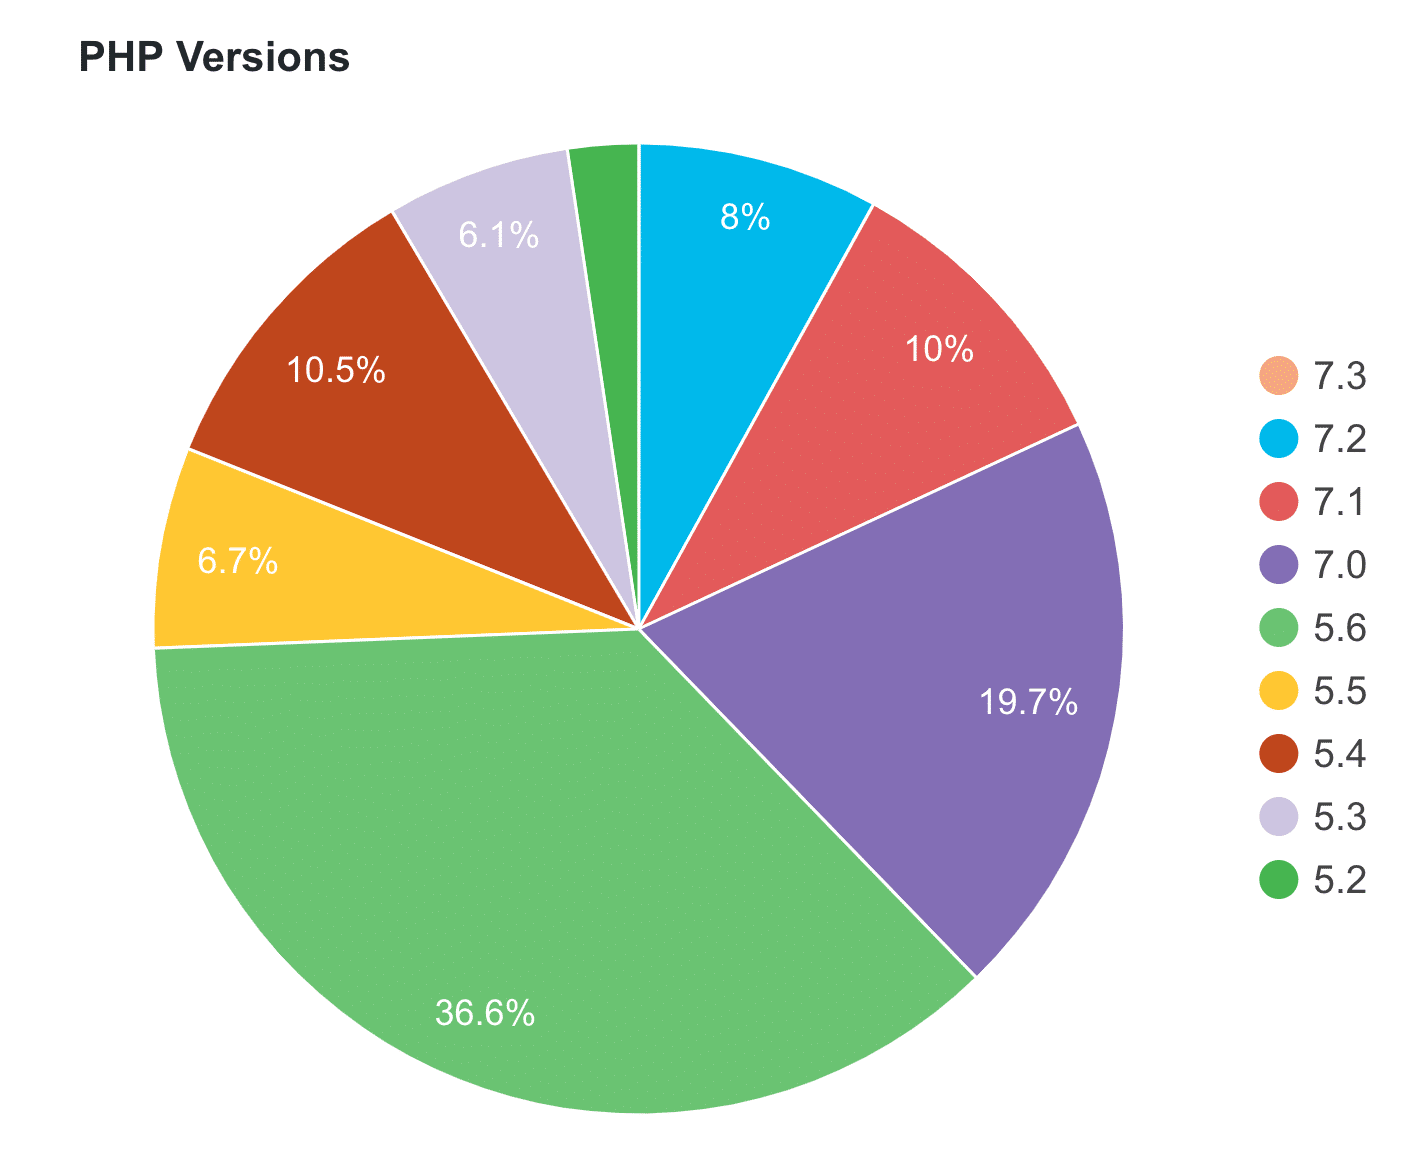 PHP version usage for WordPress sites